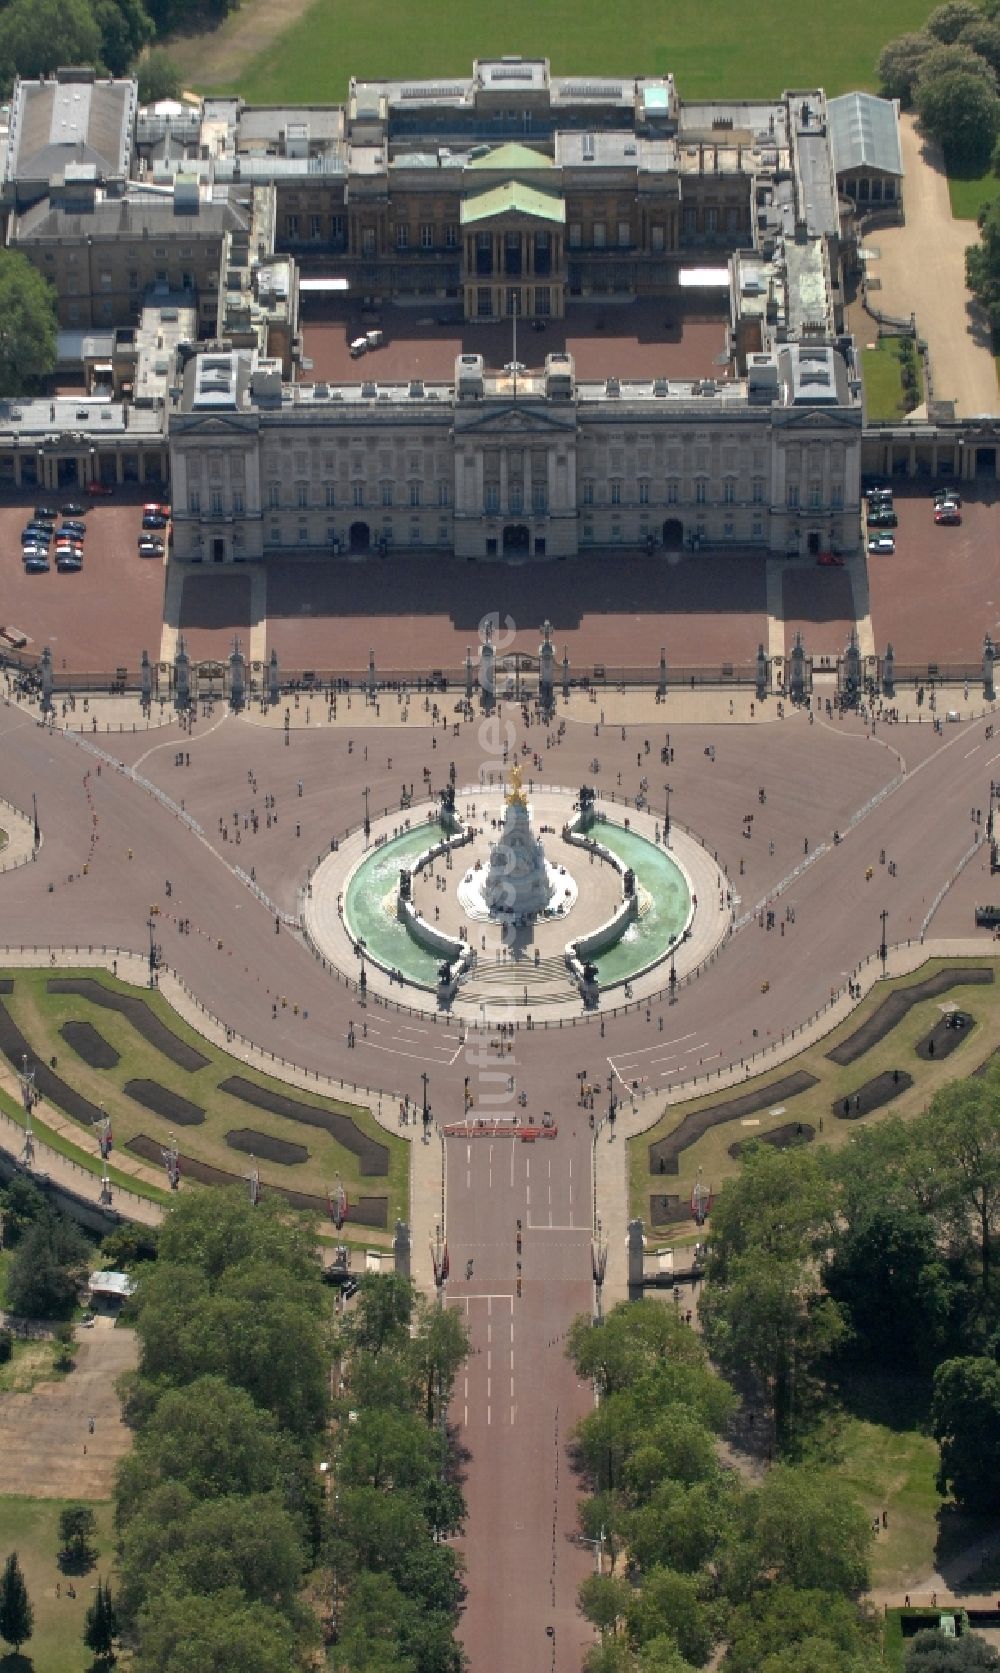 London von oben - Buckingham Palace - der Palast Stadtbezirk City of Westminster in London